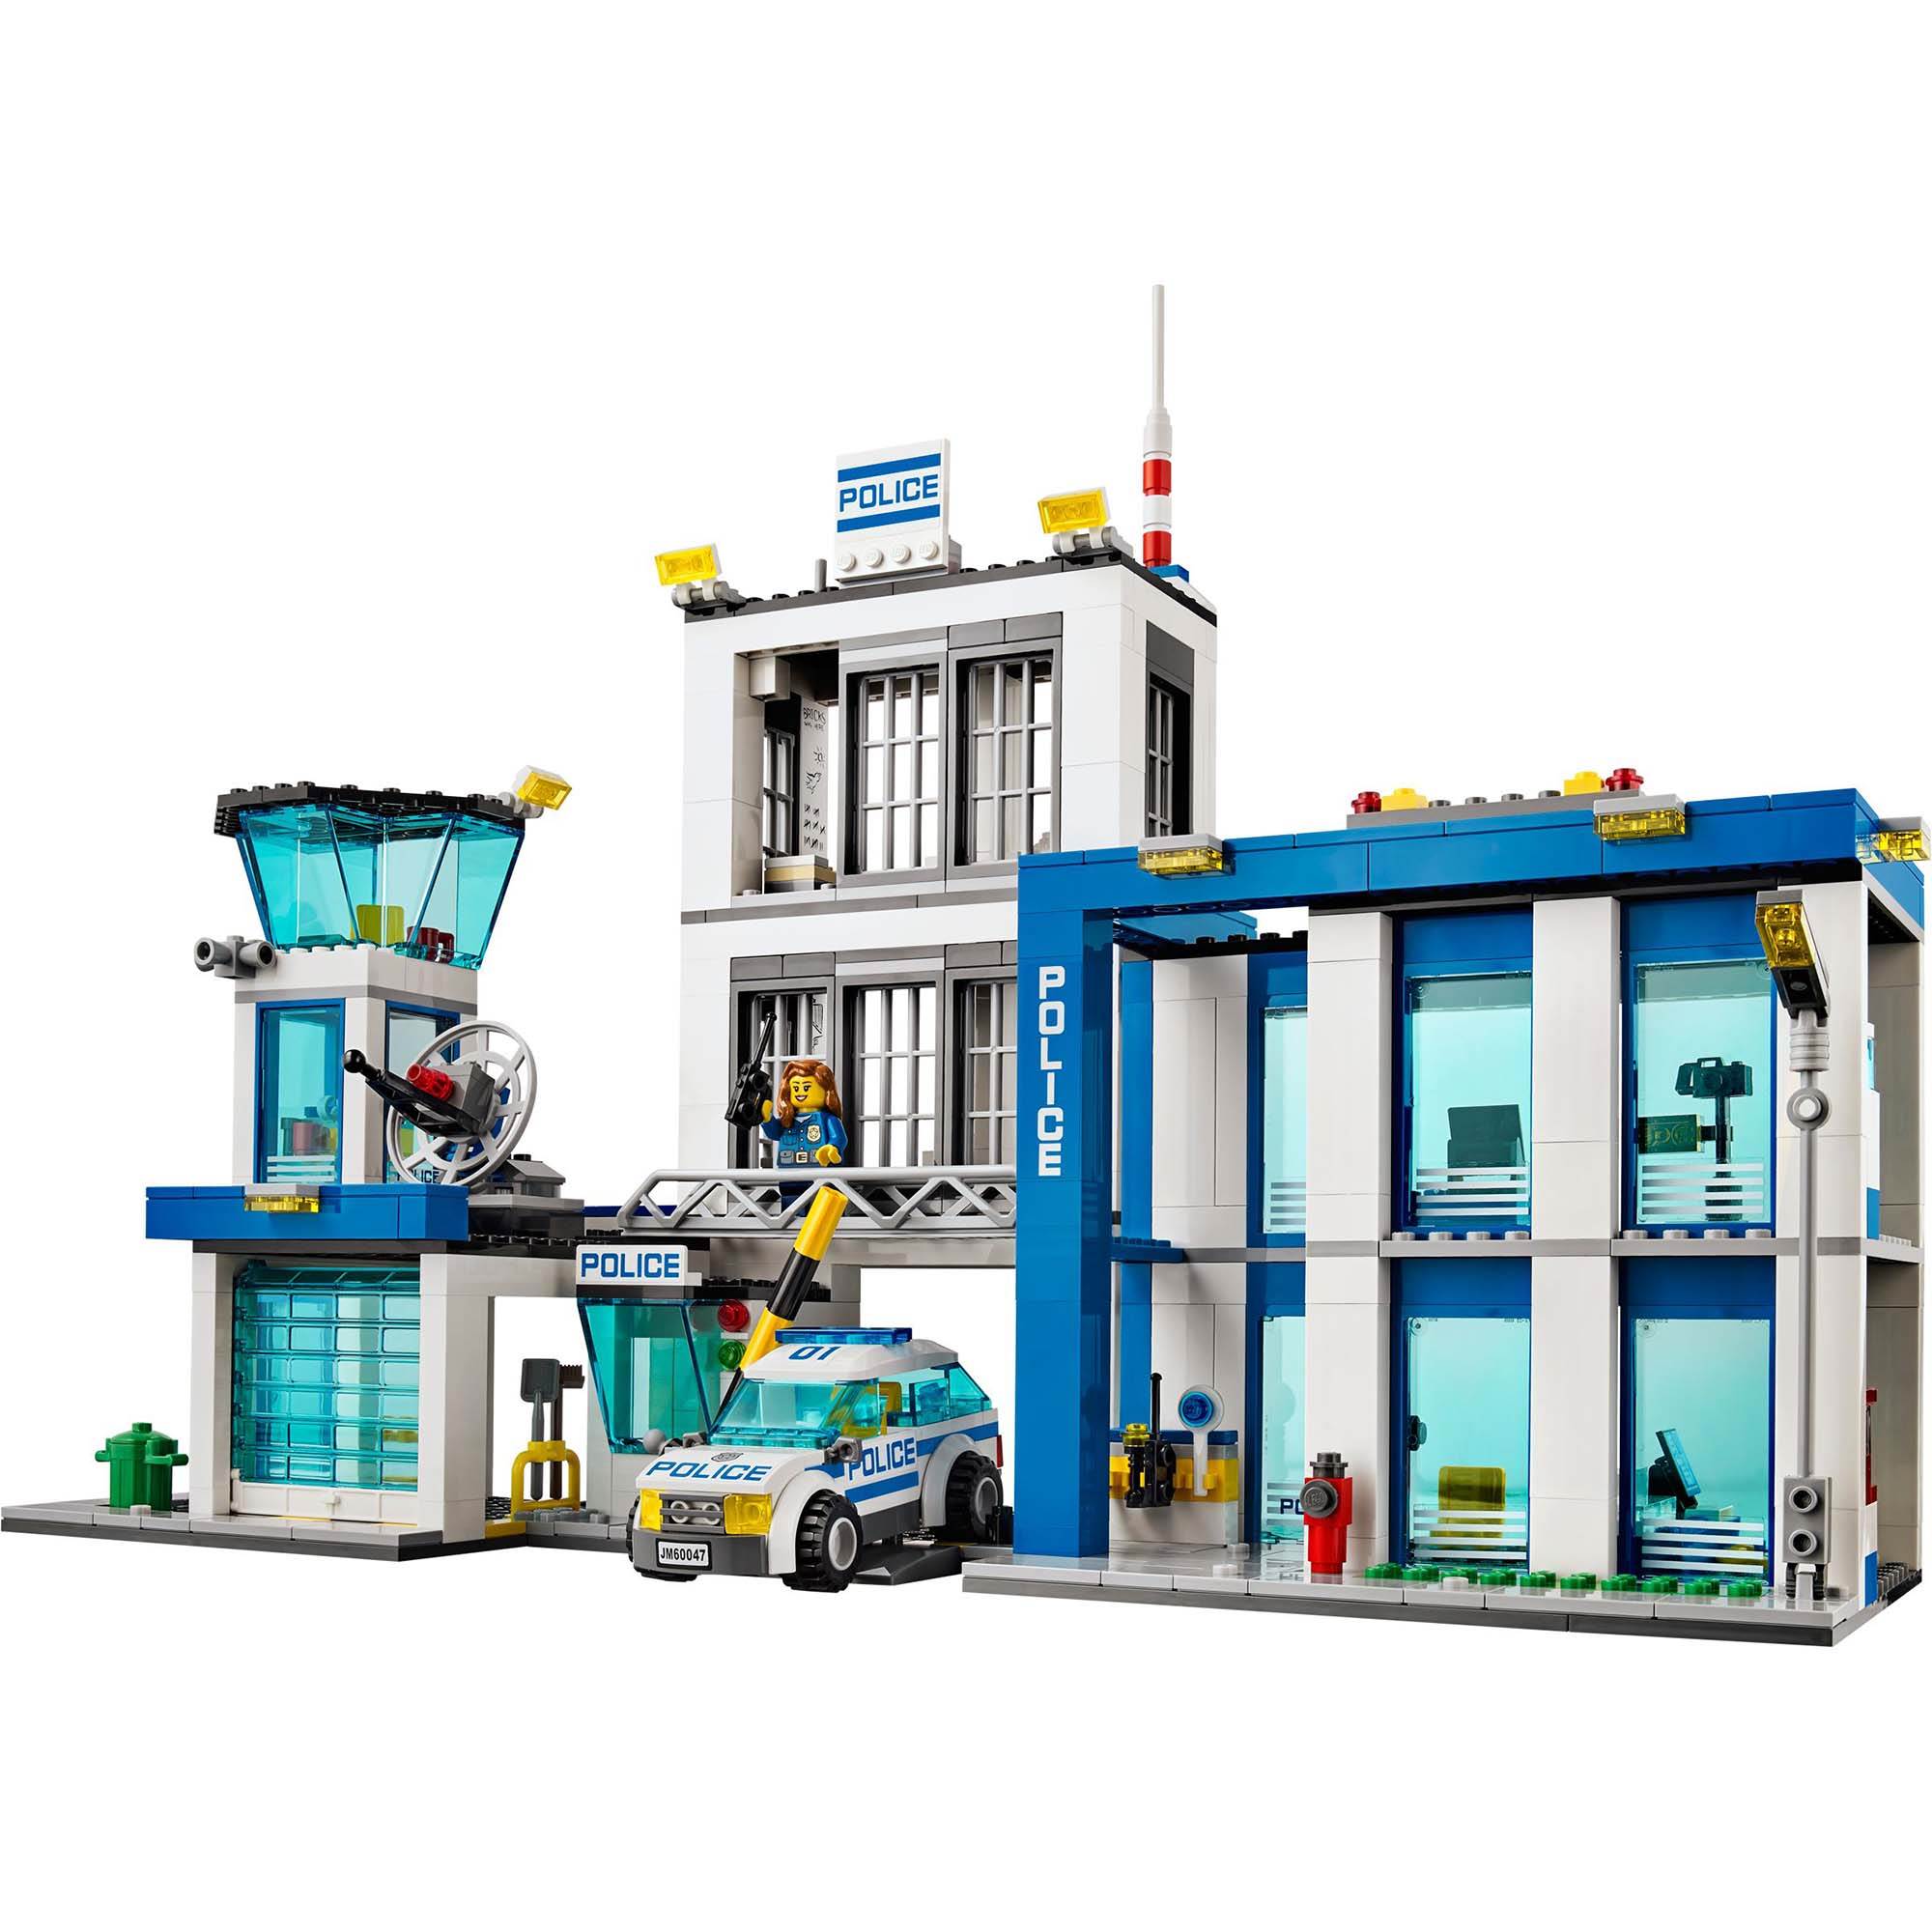 LEGO City 60047 - Police Station - image 3 of 7